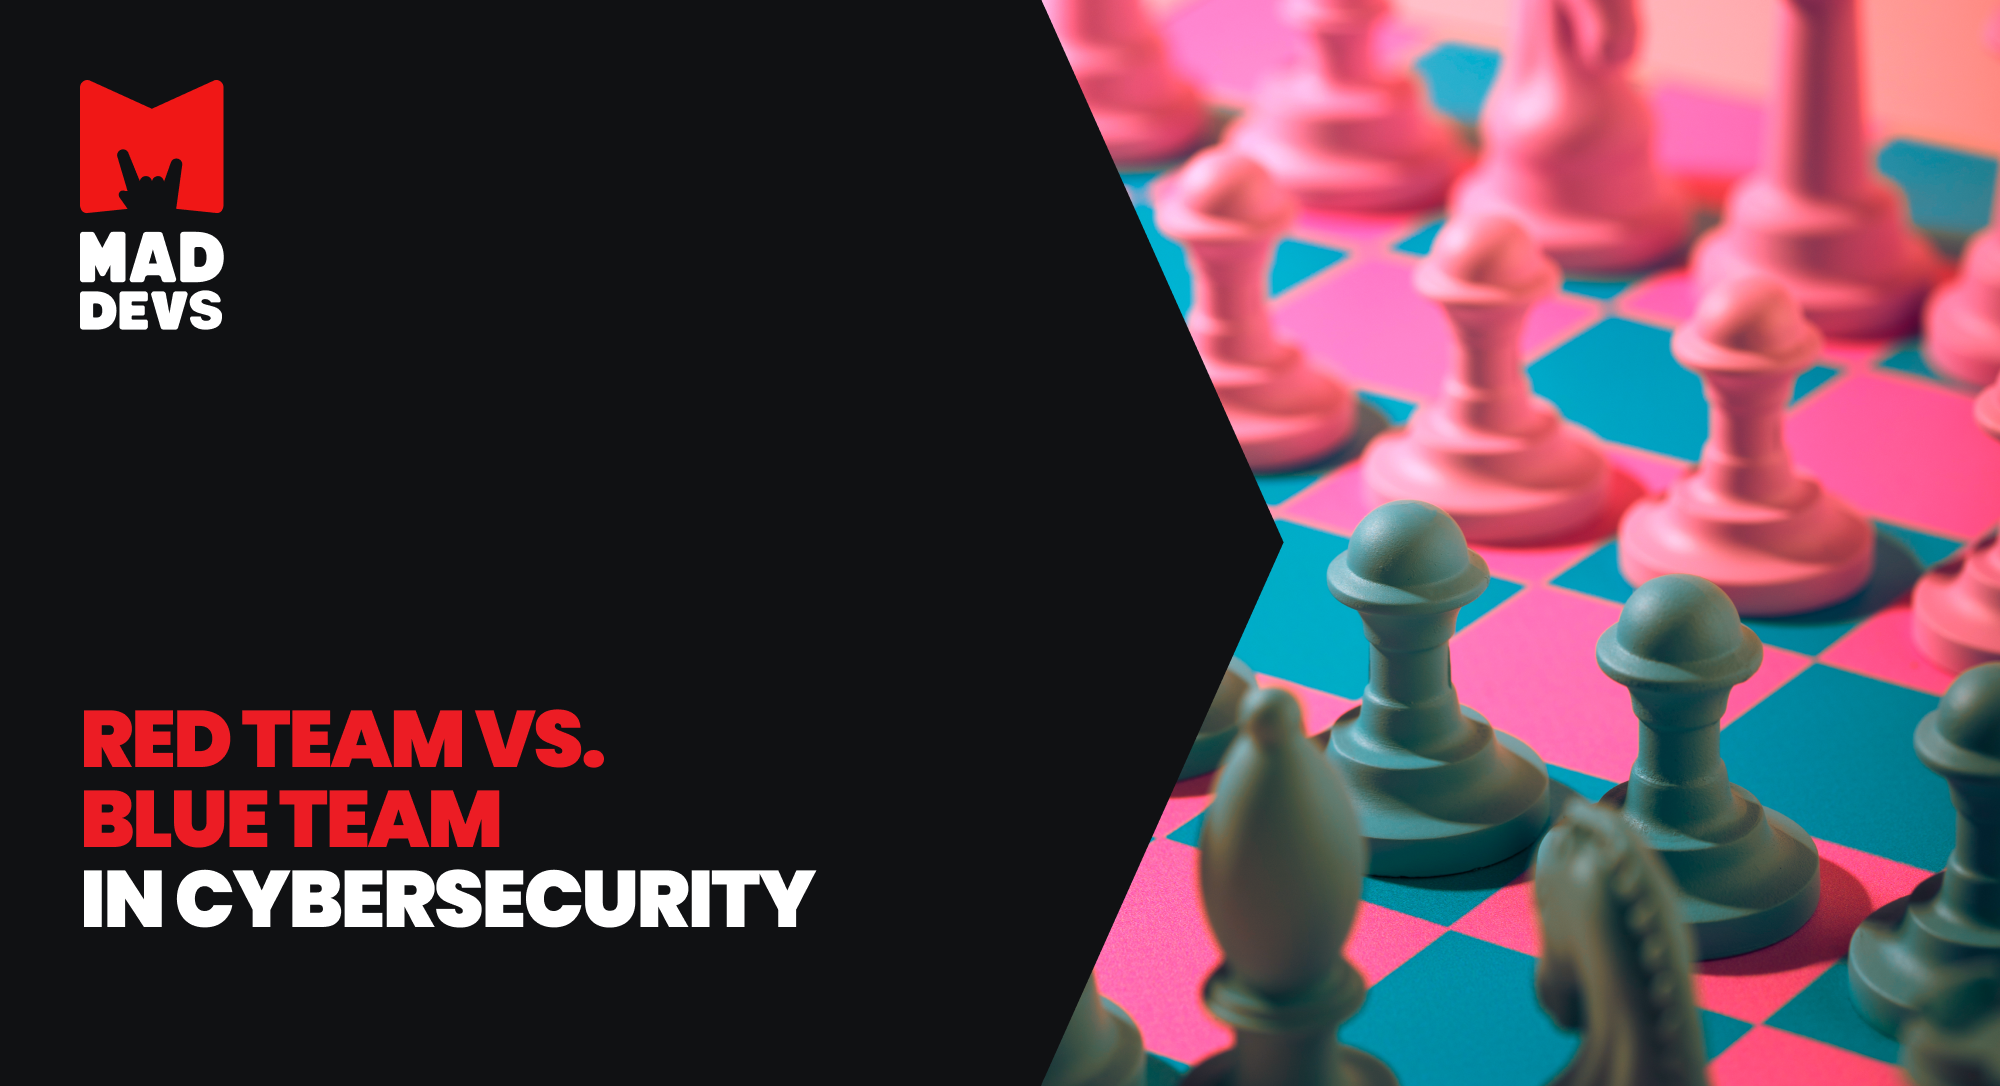 Mobile security chess board - attacks & defense